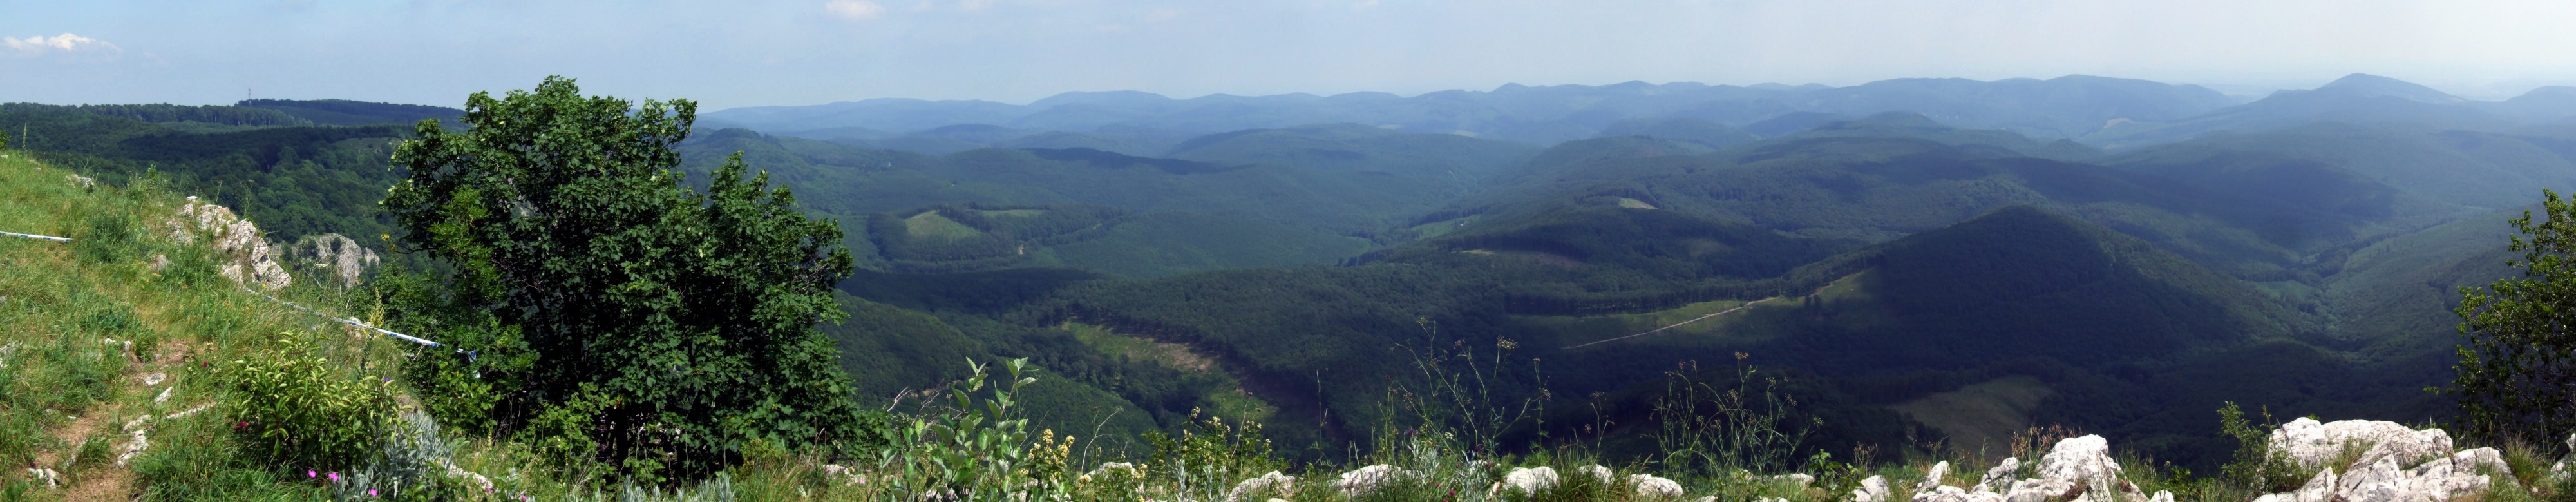 Bükk Mountains 03 (by Pudelek) - view from Tar-kő